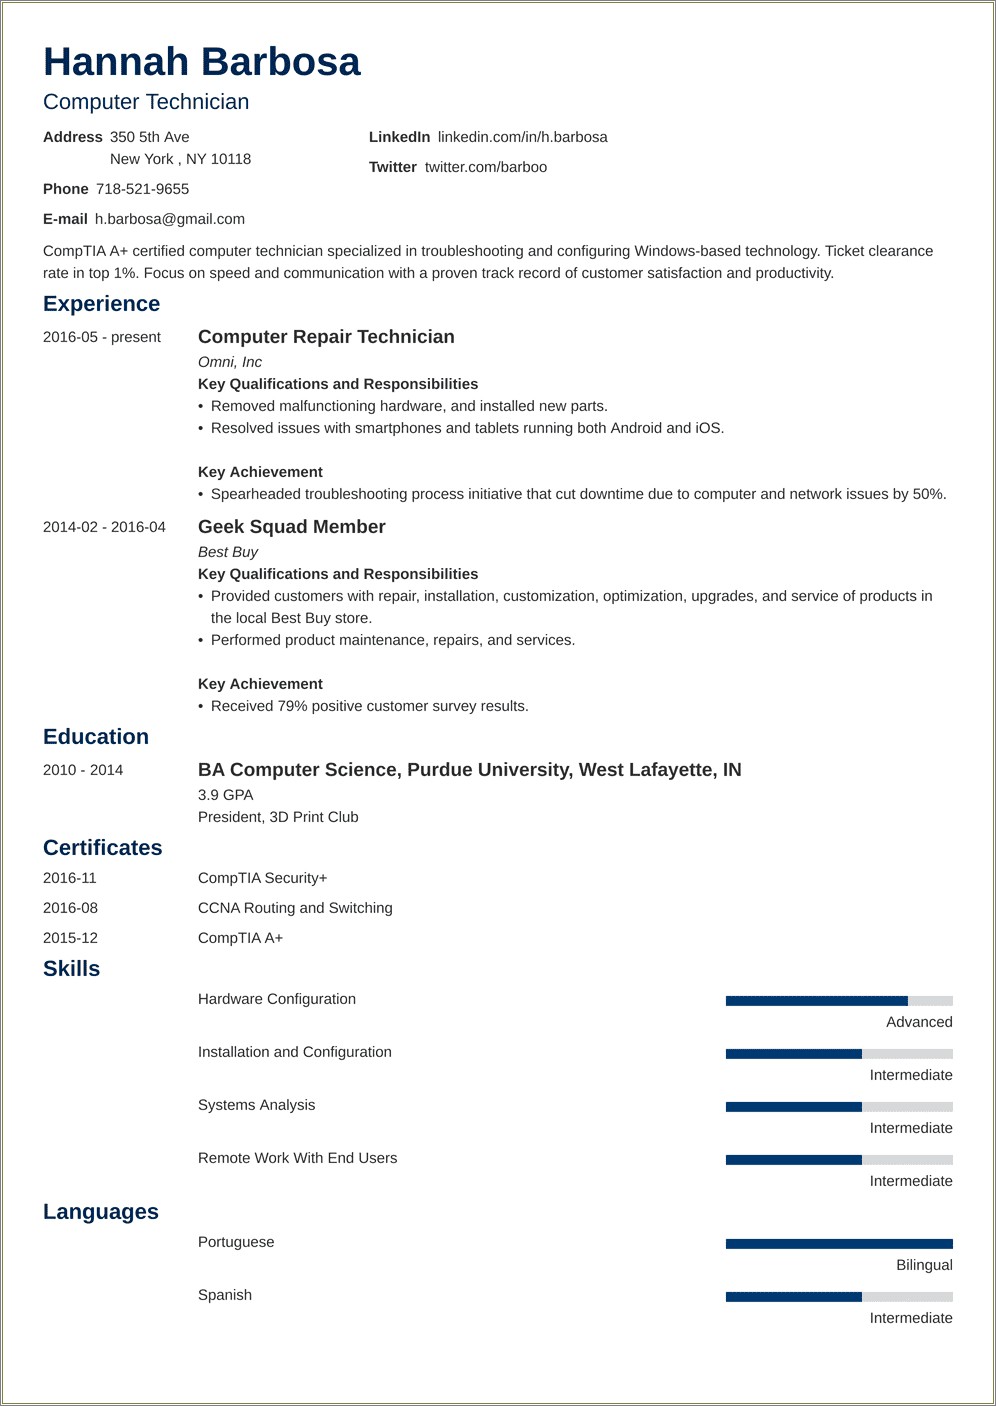 Resume Job Description For Computer Repair